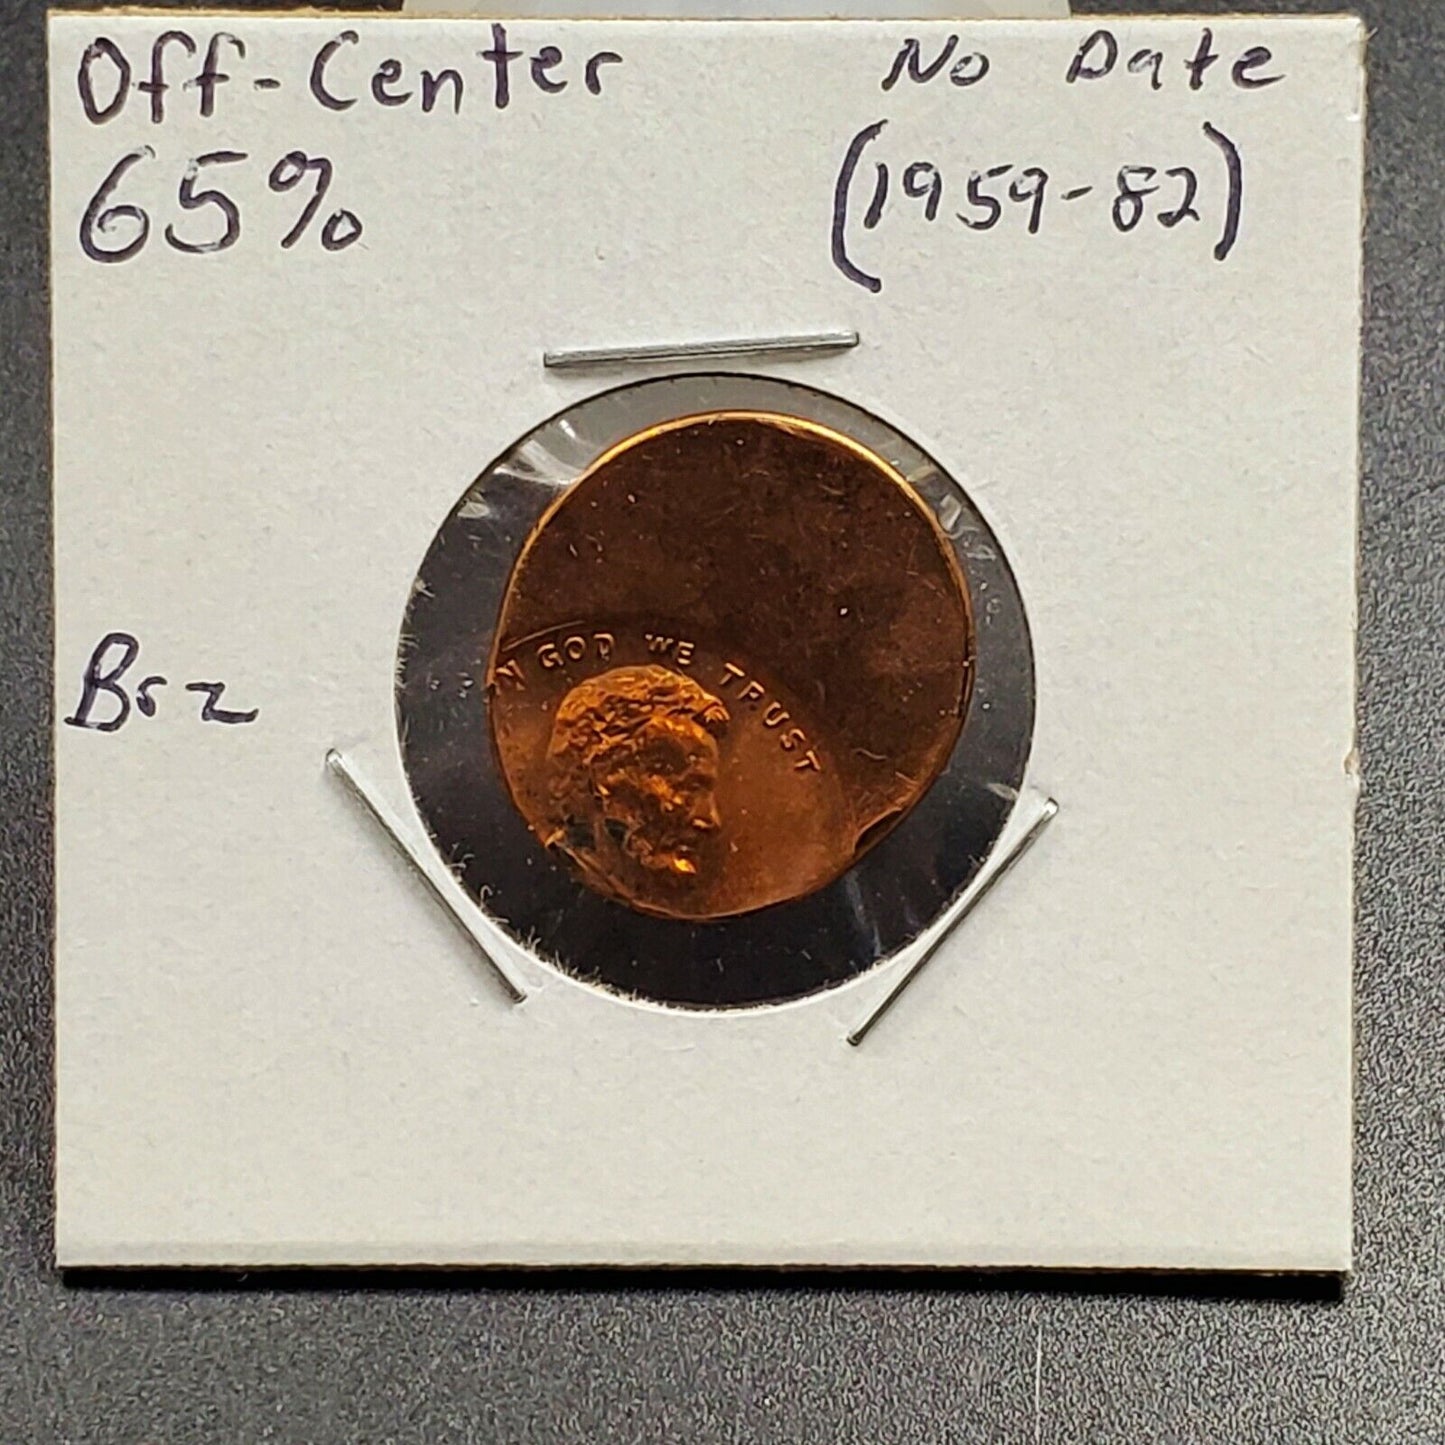 1959-1962 No Date BRONZE Alloy Lincoln Memorial Cent Off Center Error Coin UNC